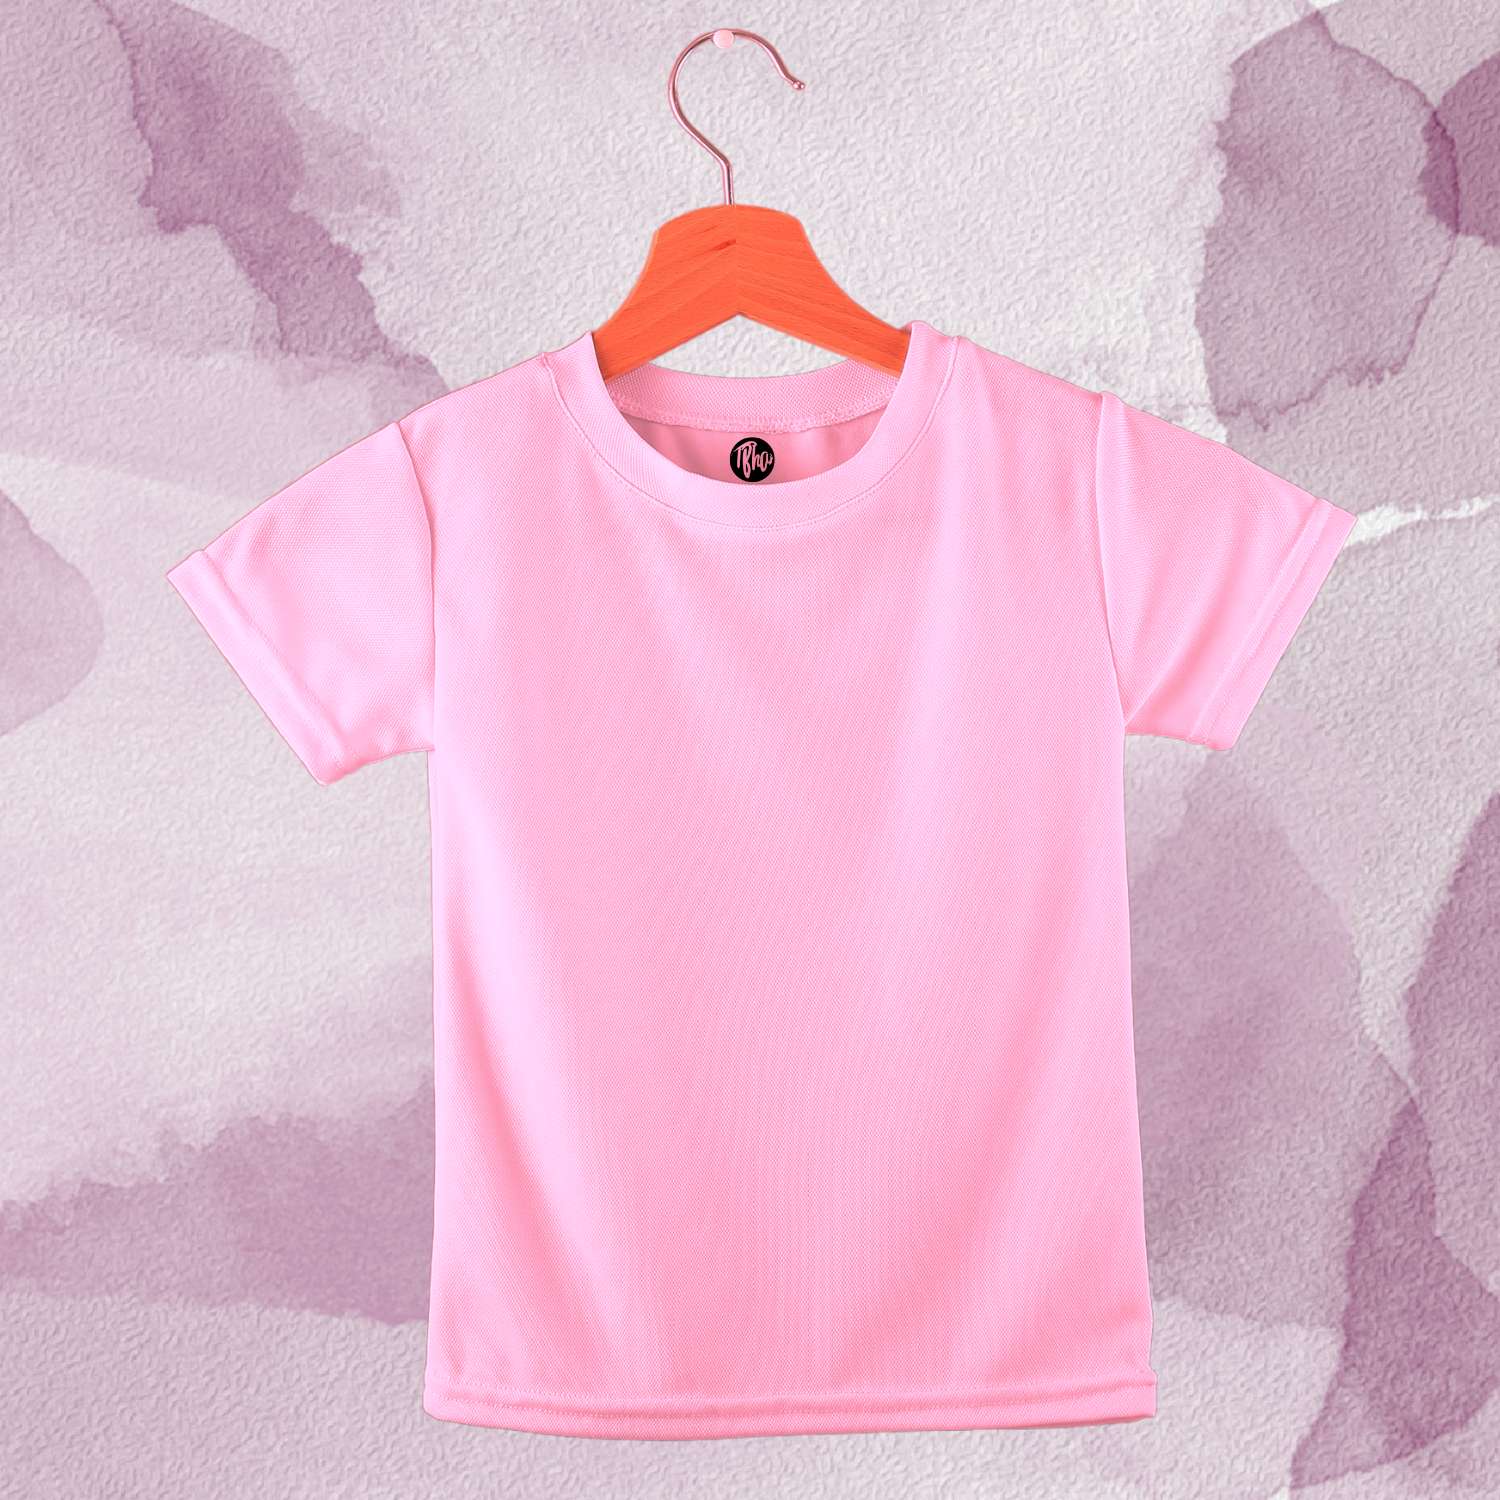 Plain Pink T-Shirt for Kids - T Bhai